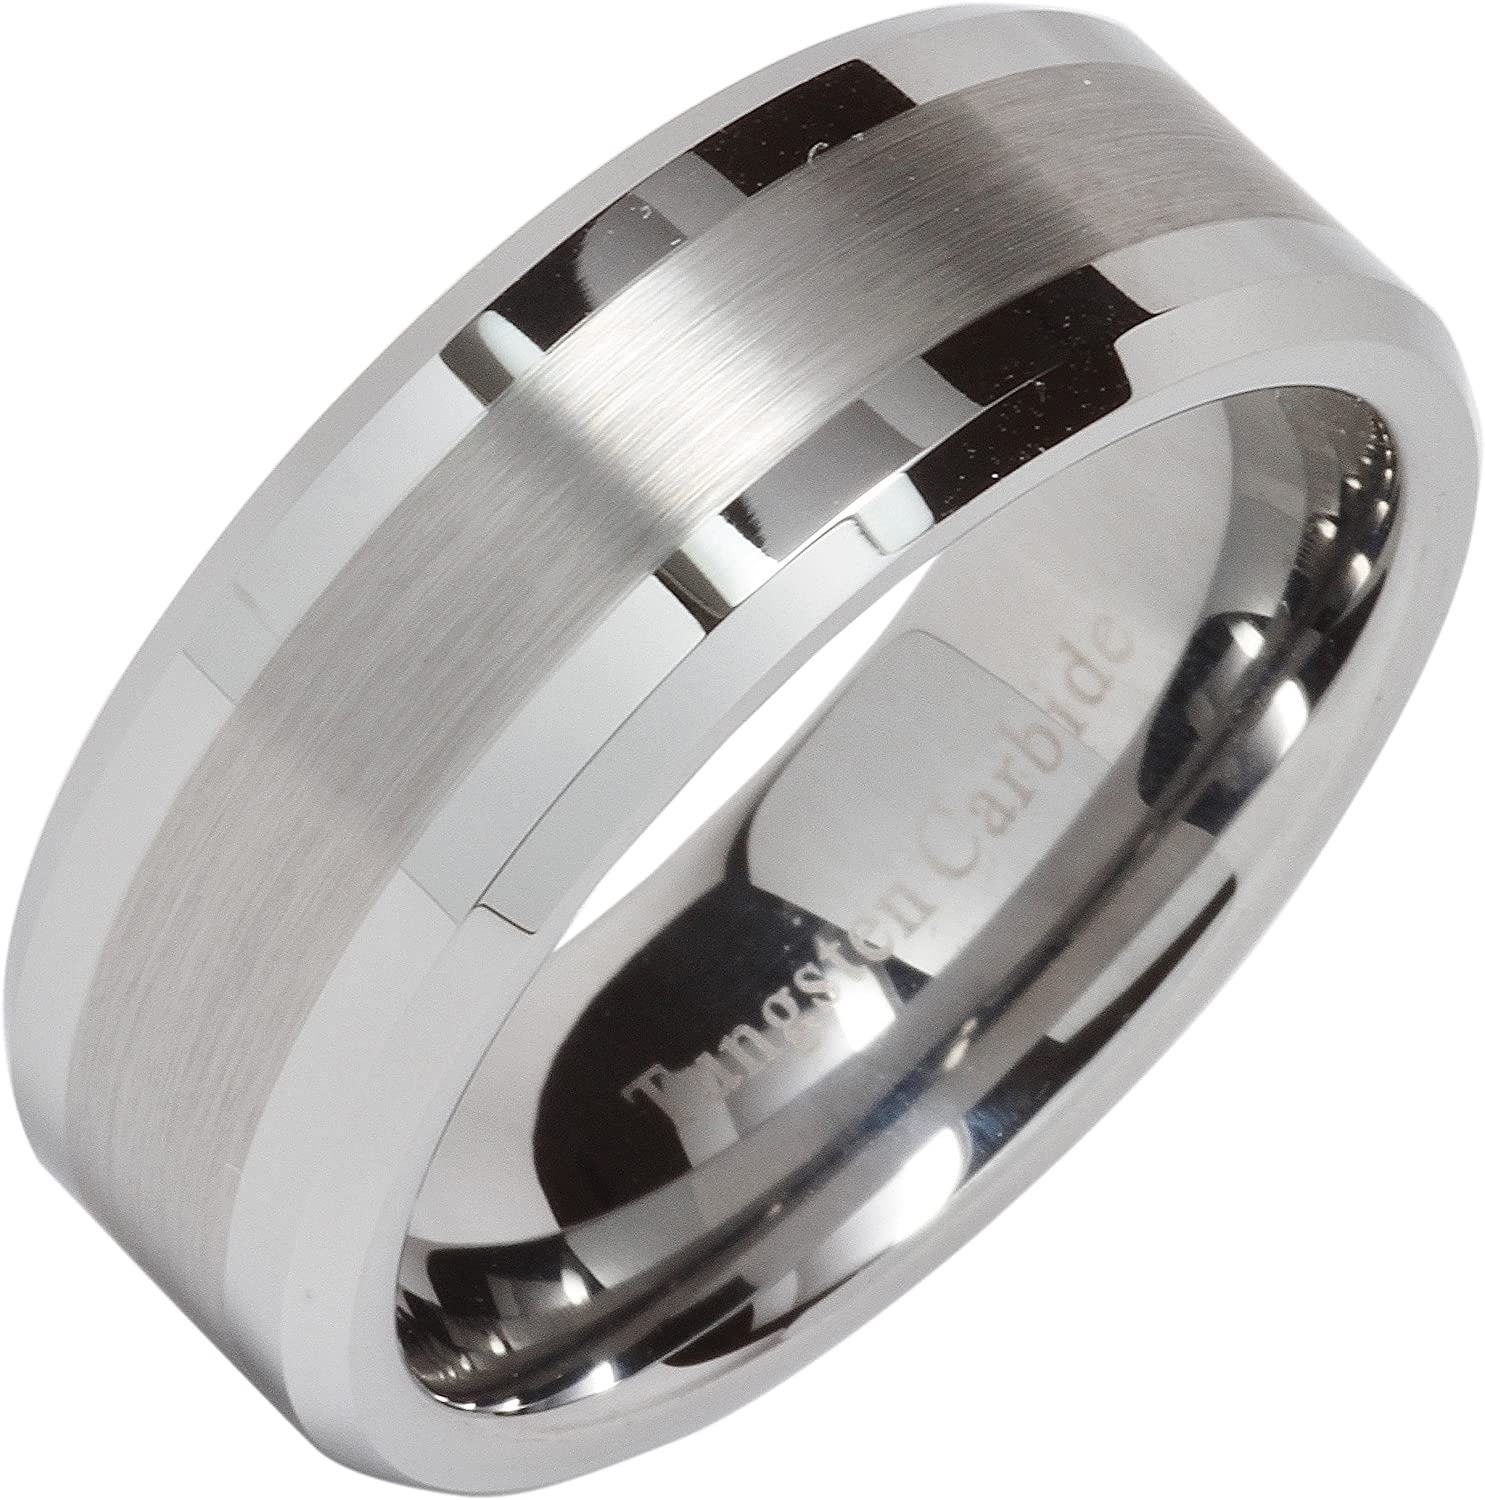 100S JEWELRY 8mm Mens Silver Tungsten Carbide Ring Wedding Band Jewelry  Bridal Size 8-14 Half|Amazon.com